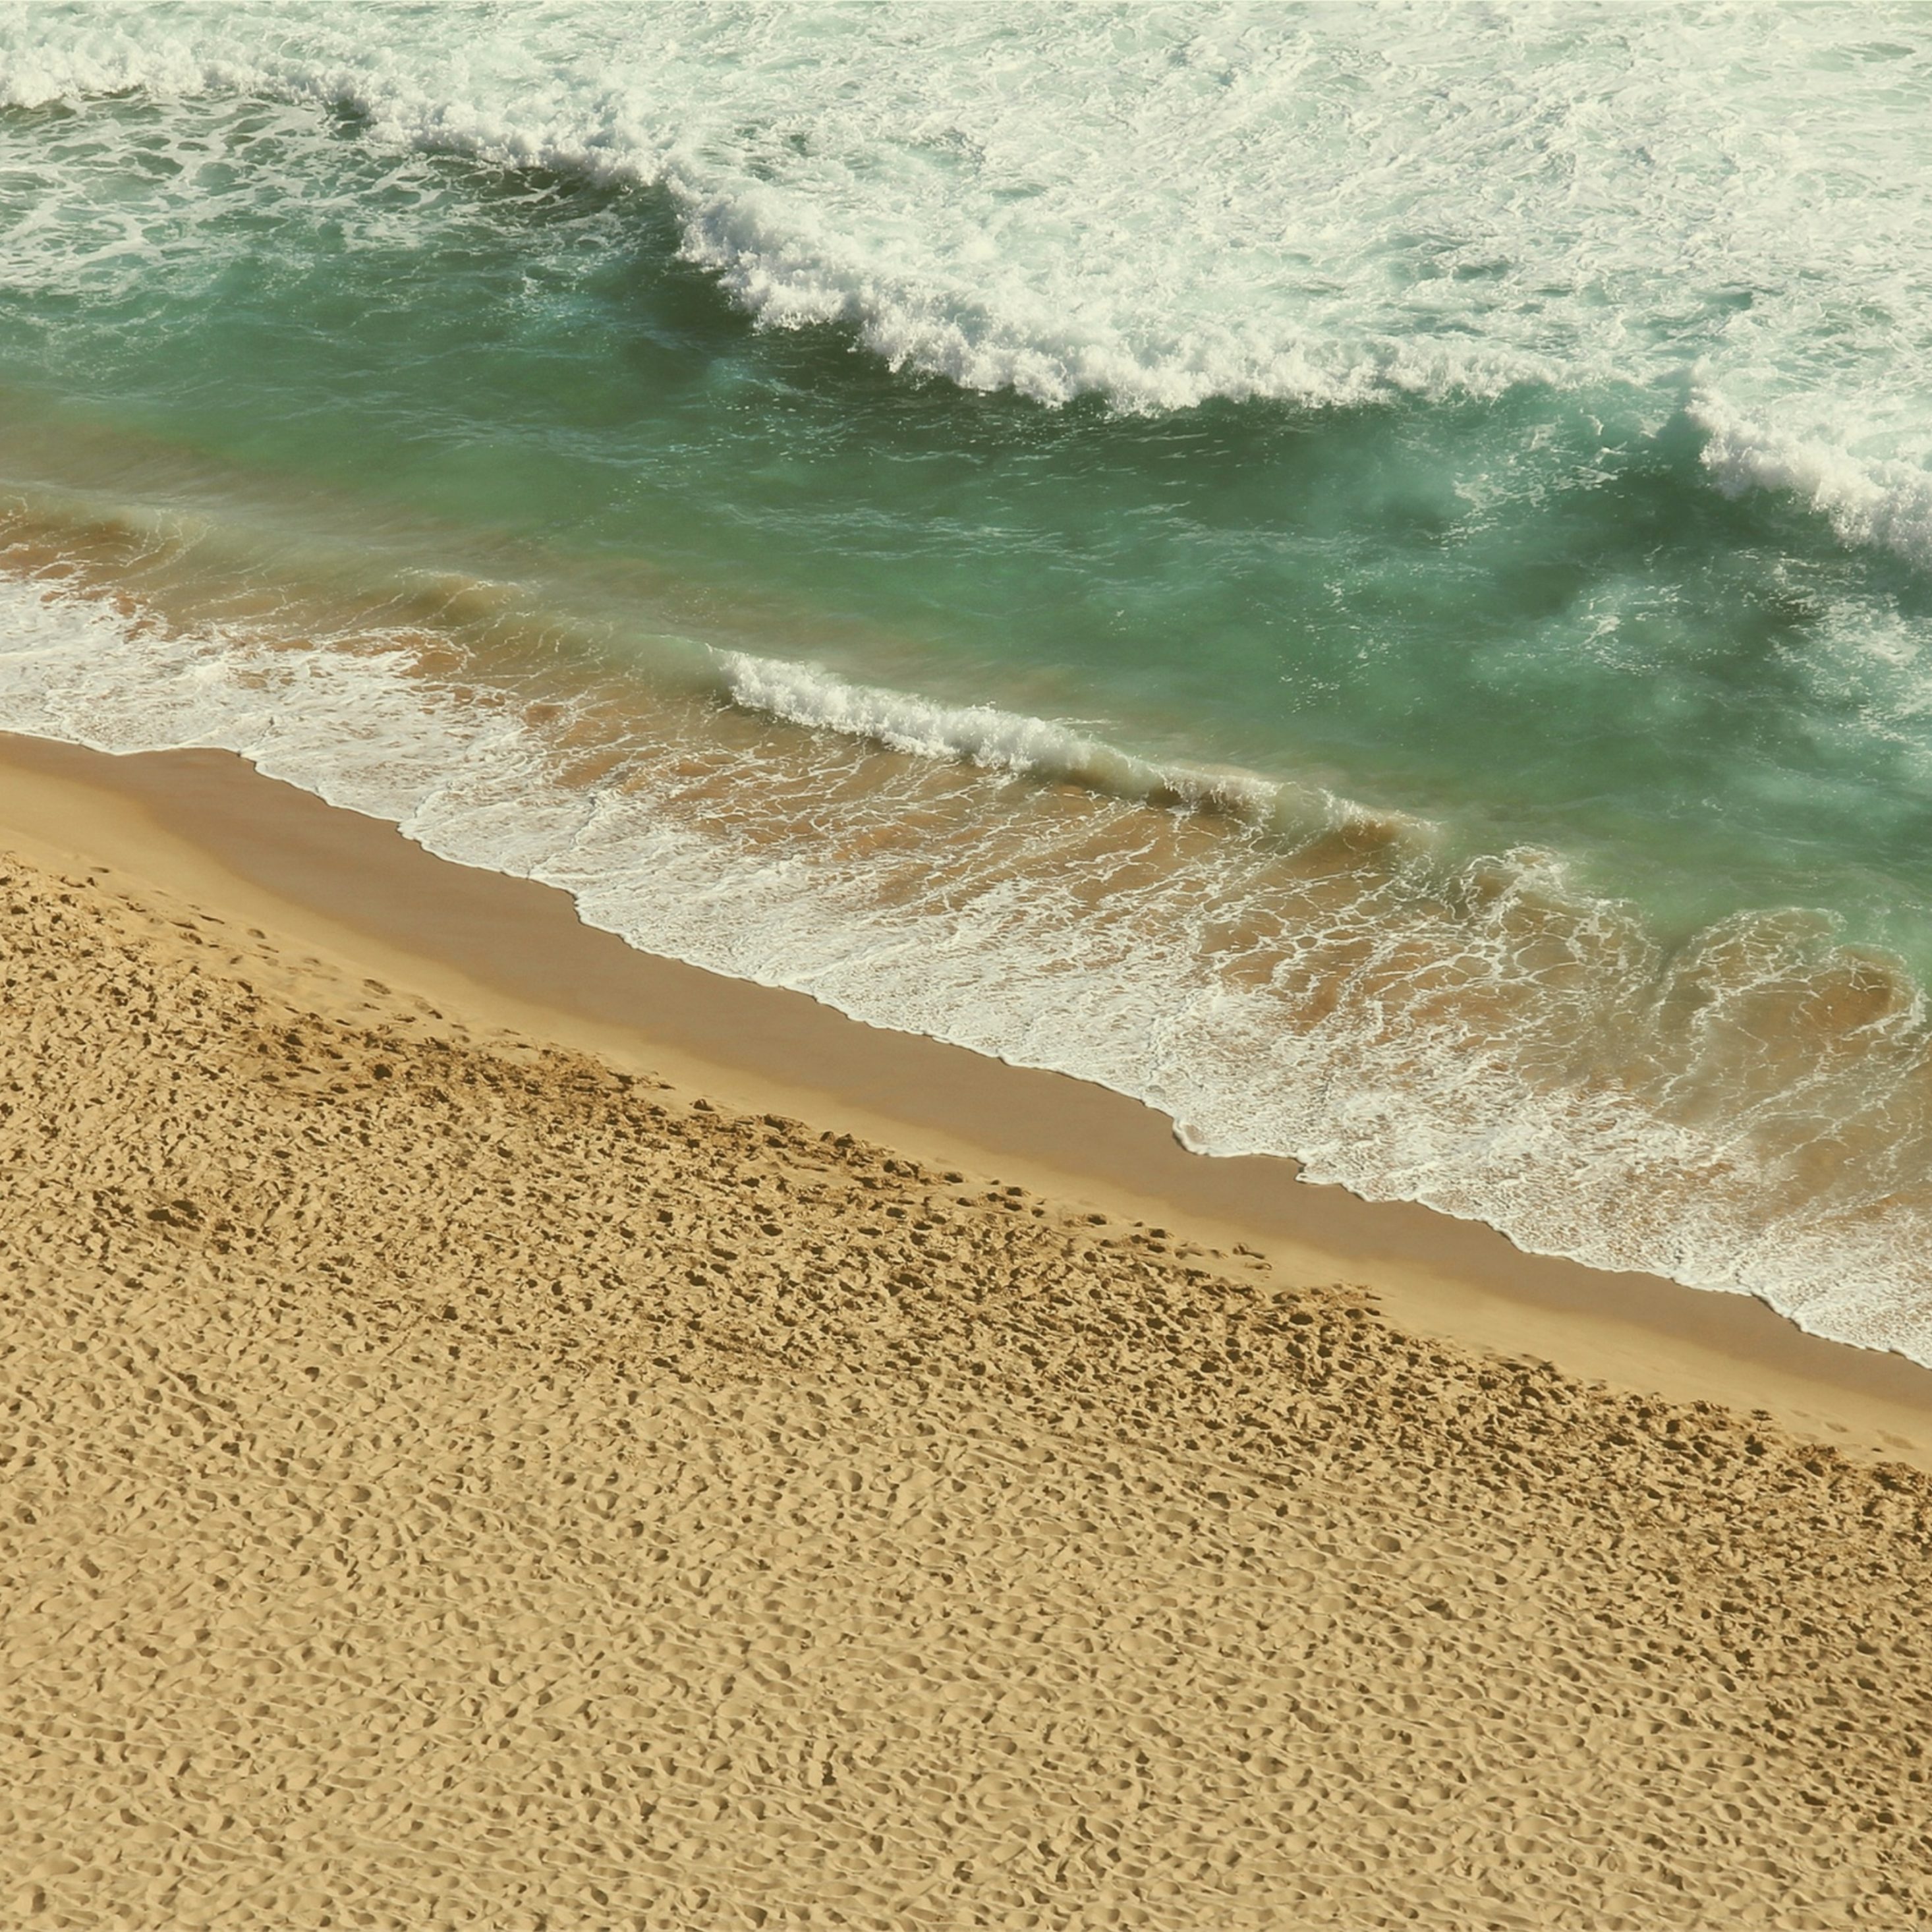 2932x2932 iPad Pro wallpaper 4k Beach Shore Ocean Waves Water iPad Wallpaper 2932x2932 pixels resolution